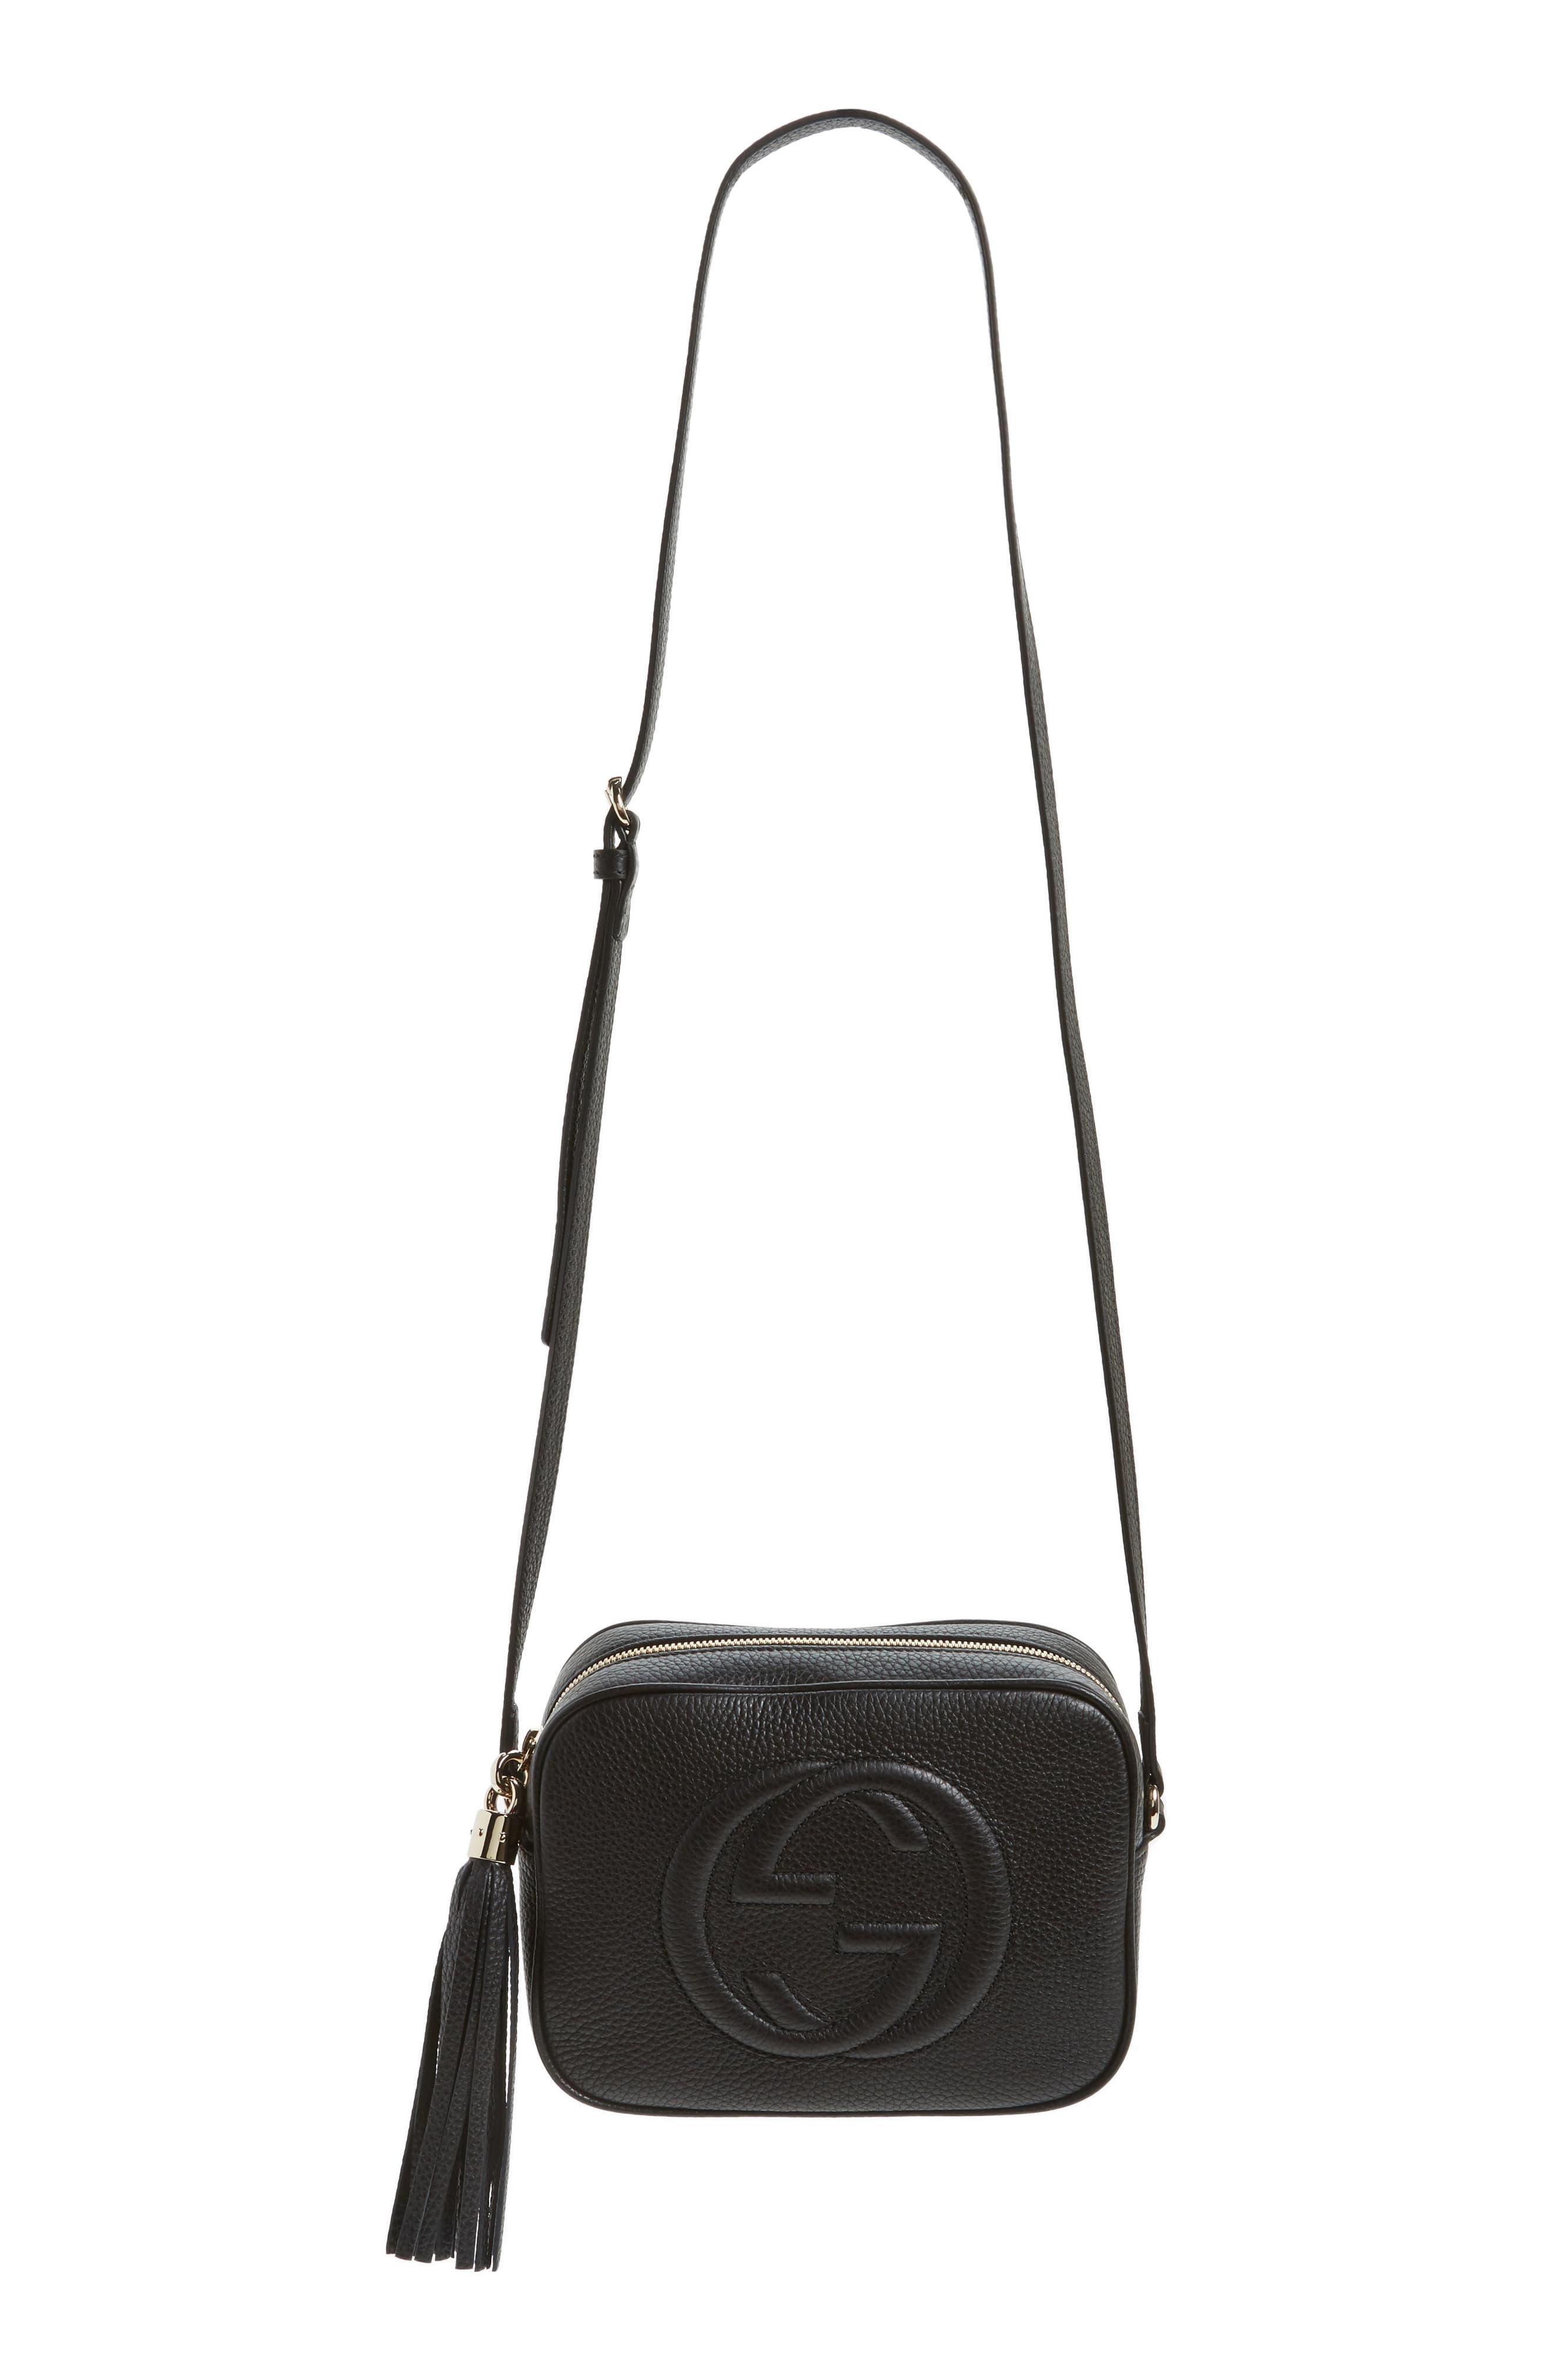 Gucci Soho Disco Leather Shoulder Bag in Black - Save 18% - Lyst